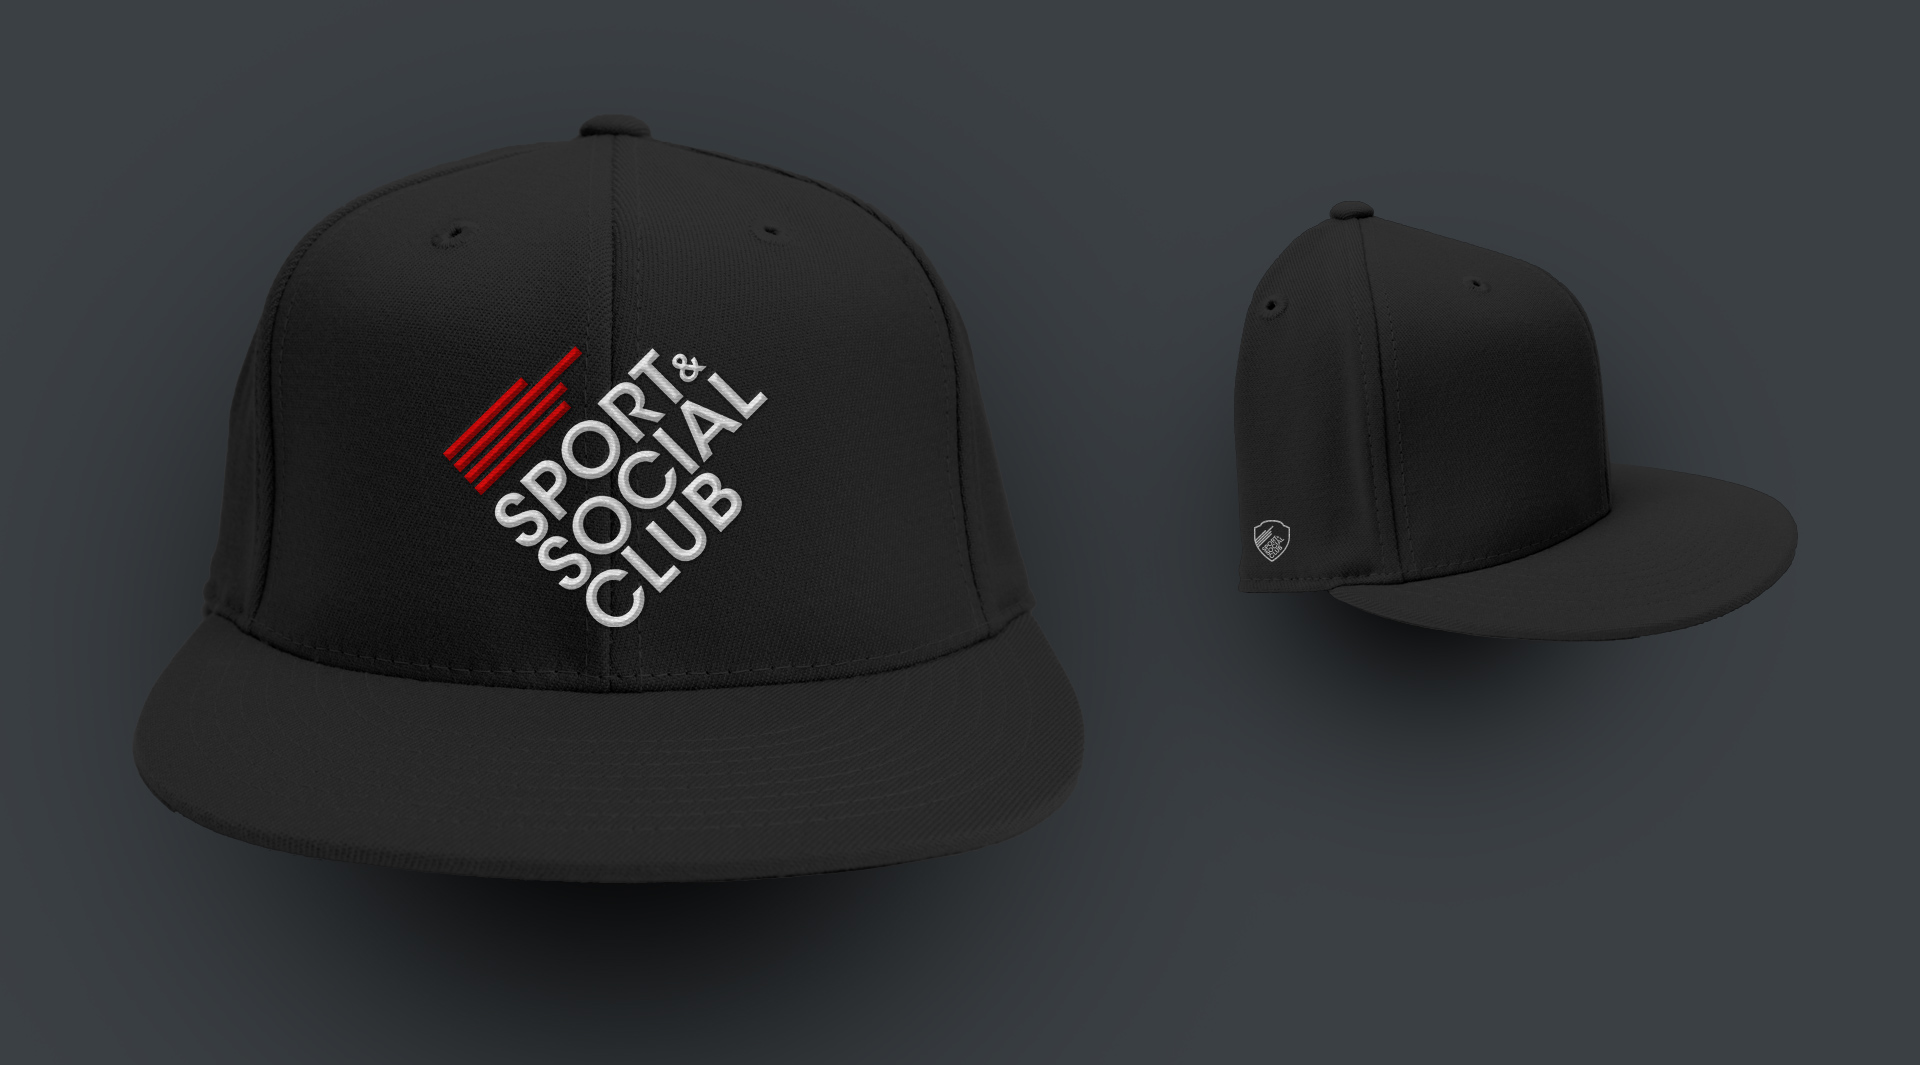 Sports & Social Club baseball cap design